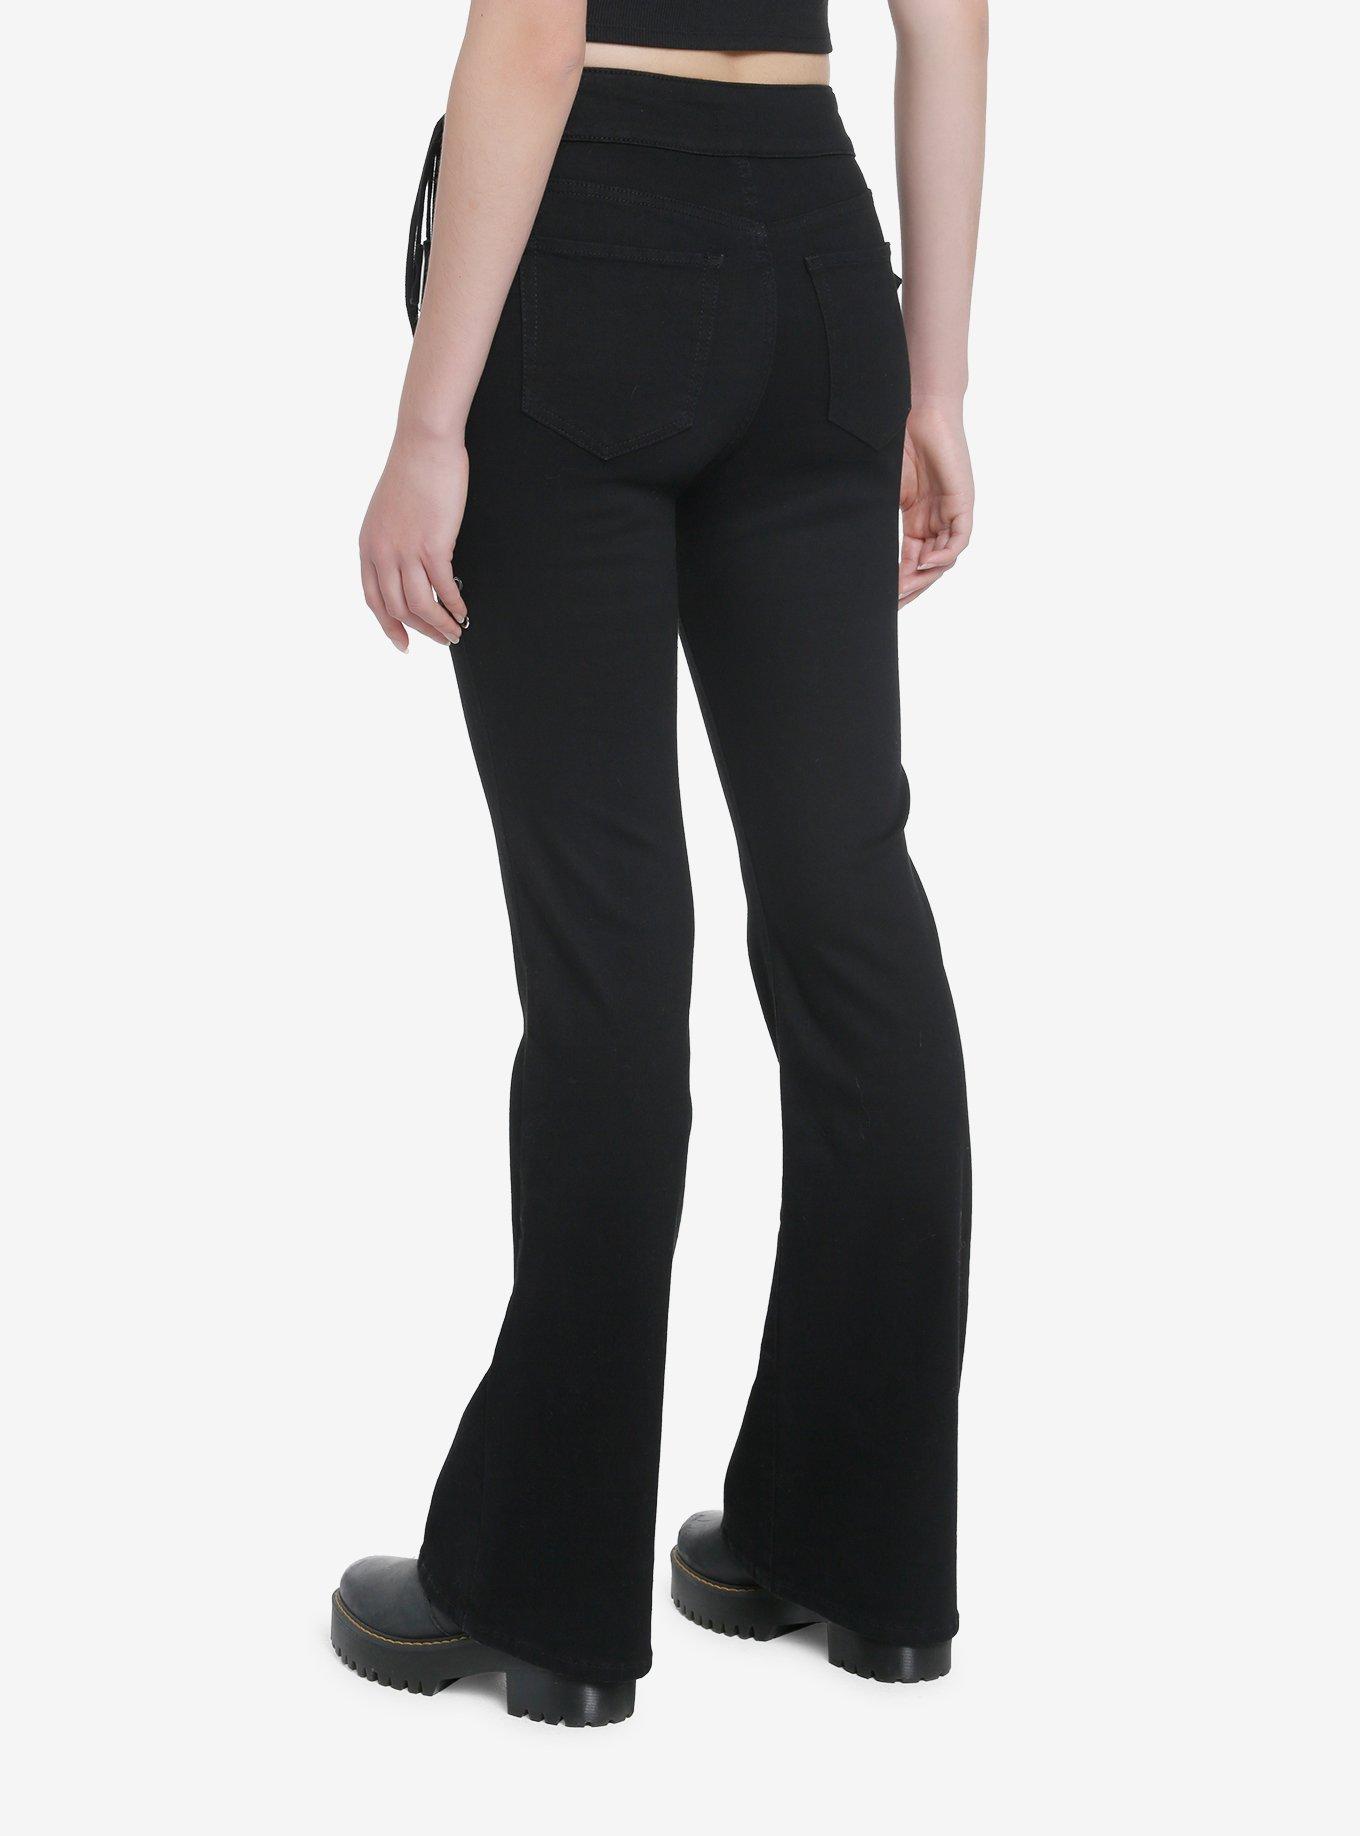 Black Lace-Up Flare Denim Pants, BLACK, alternate